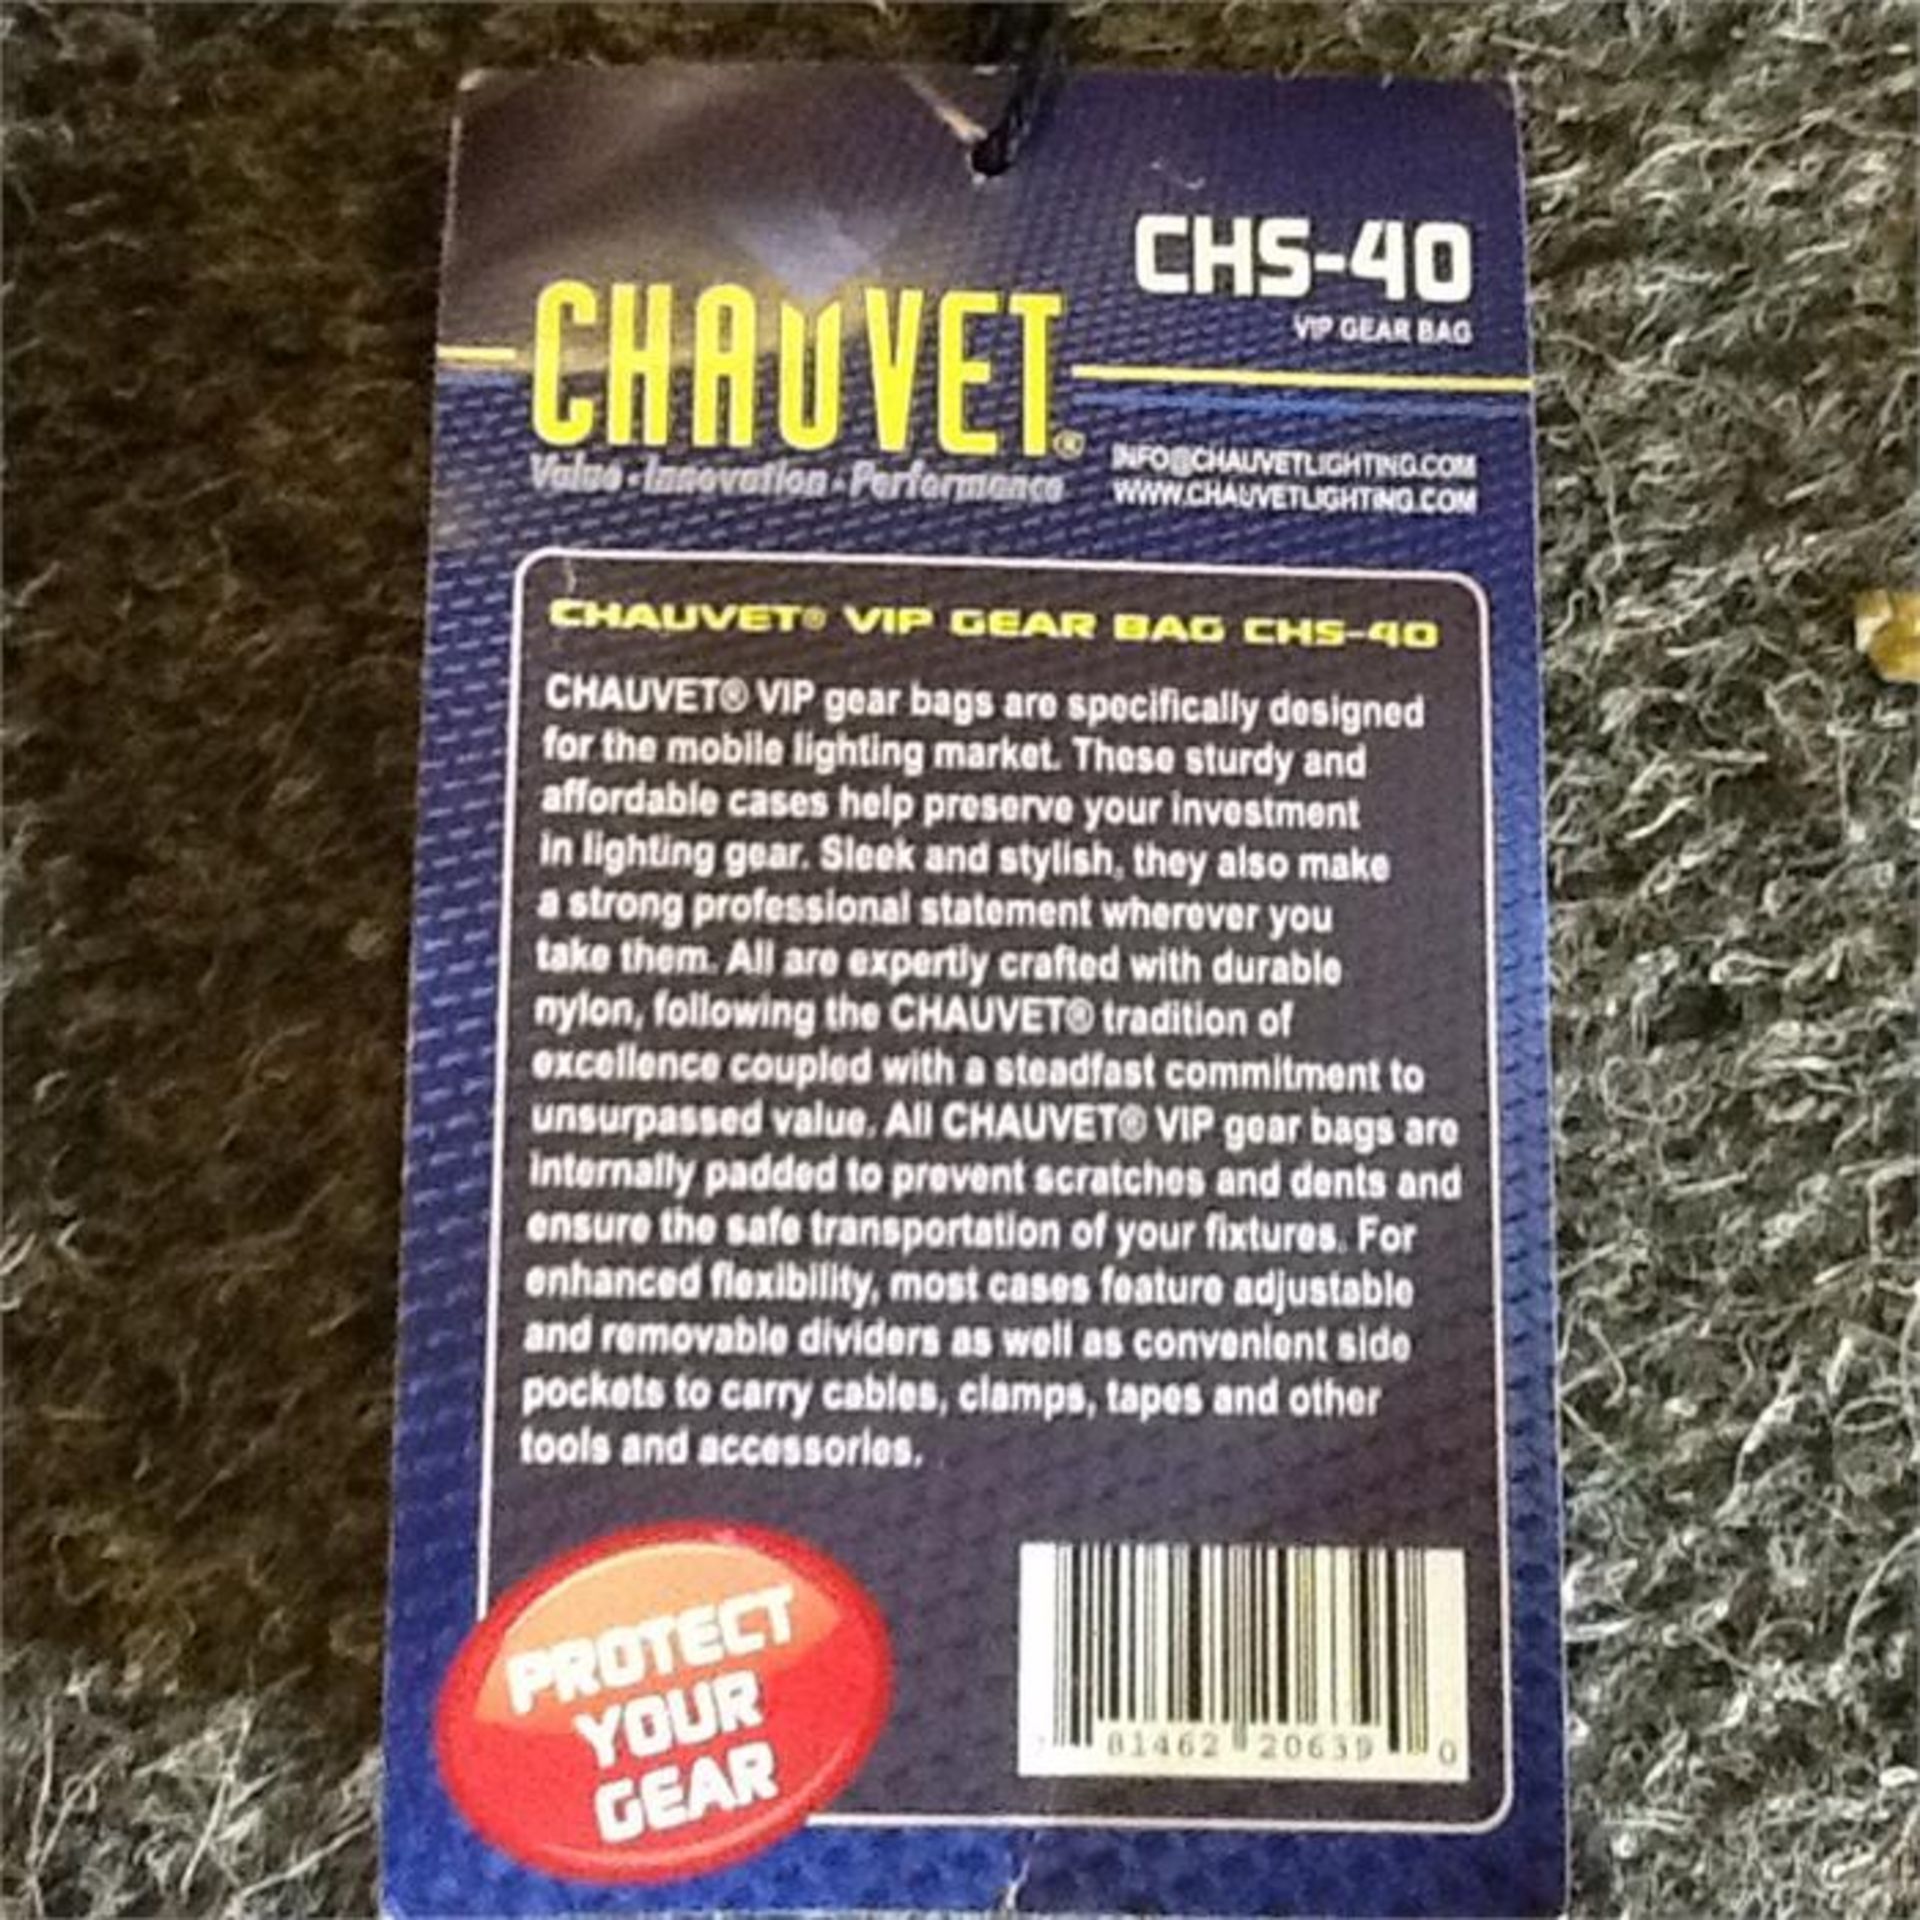 Chauvet  CHS-40 vip gear bag - Image 8 of 10